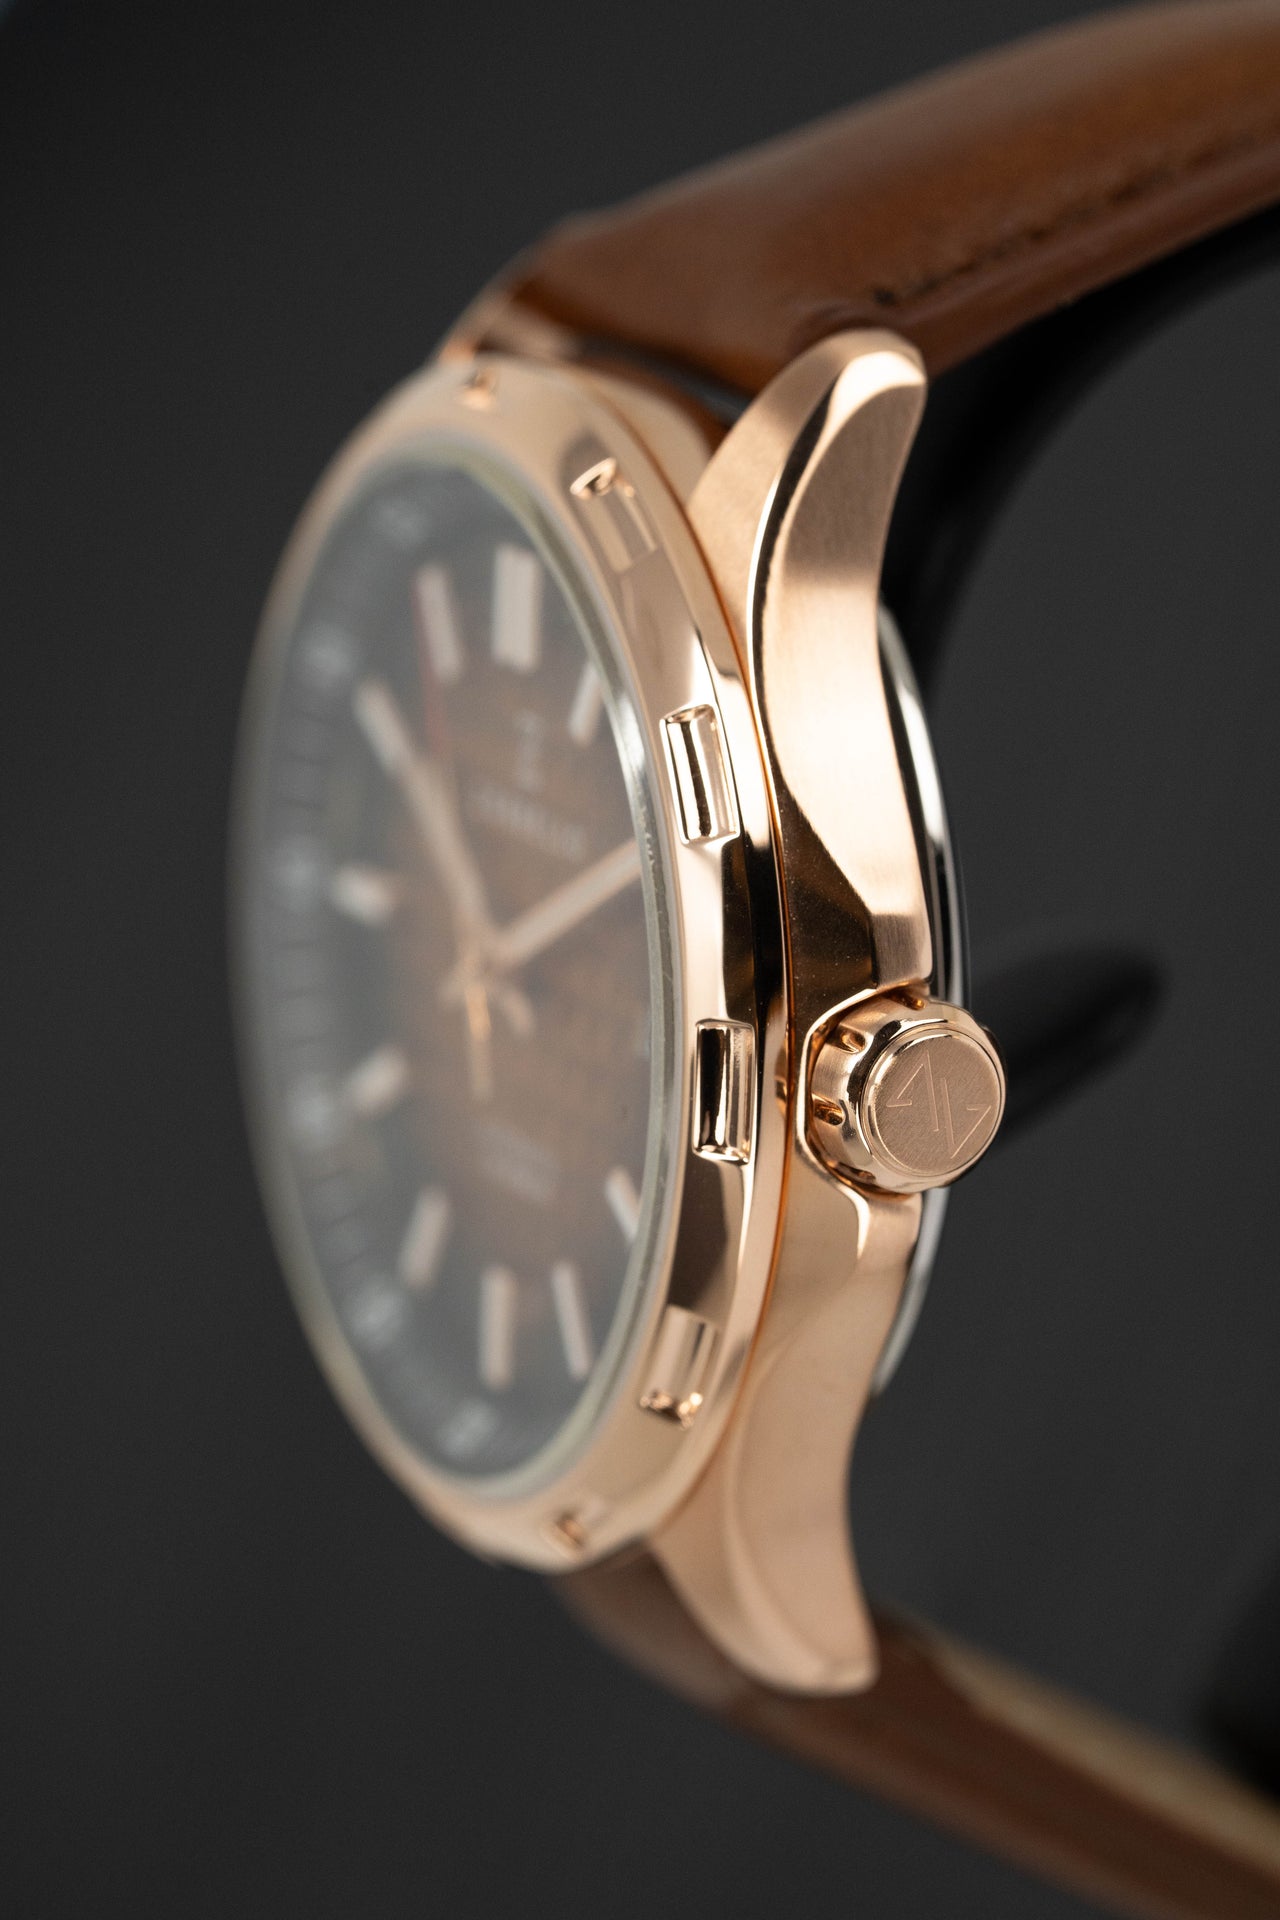 Zorbello Mechanical Watch M1 Series Brown LumiNova® ZBAE001